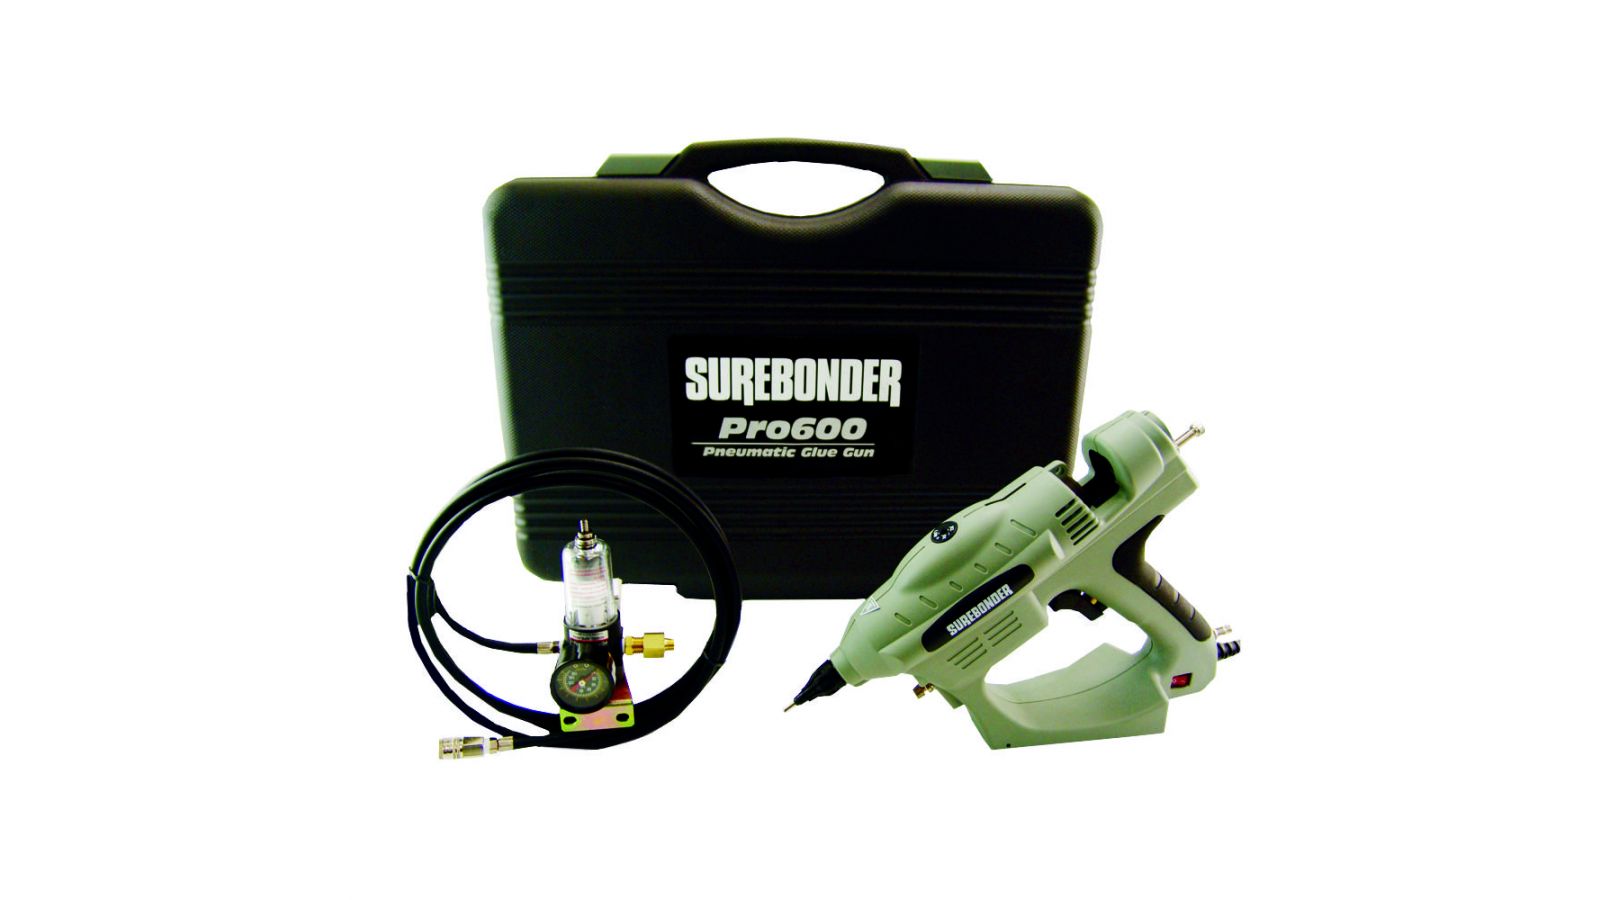 PRO600 Temperature controlled Pneumatic ( Industrial Glue Gun )